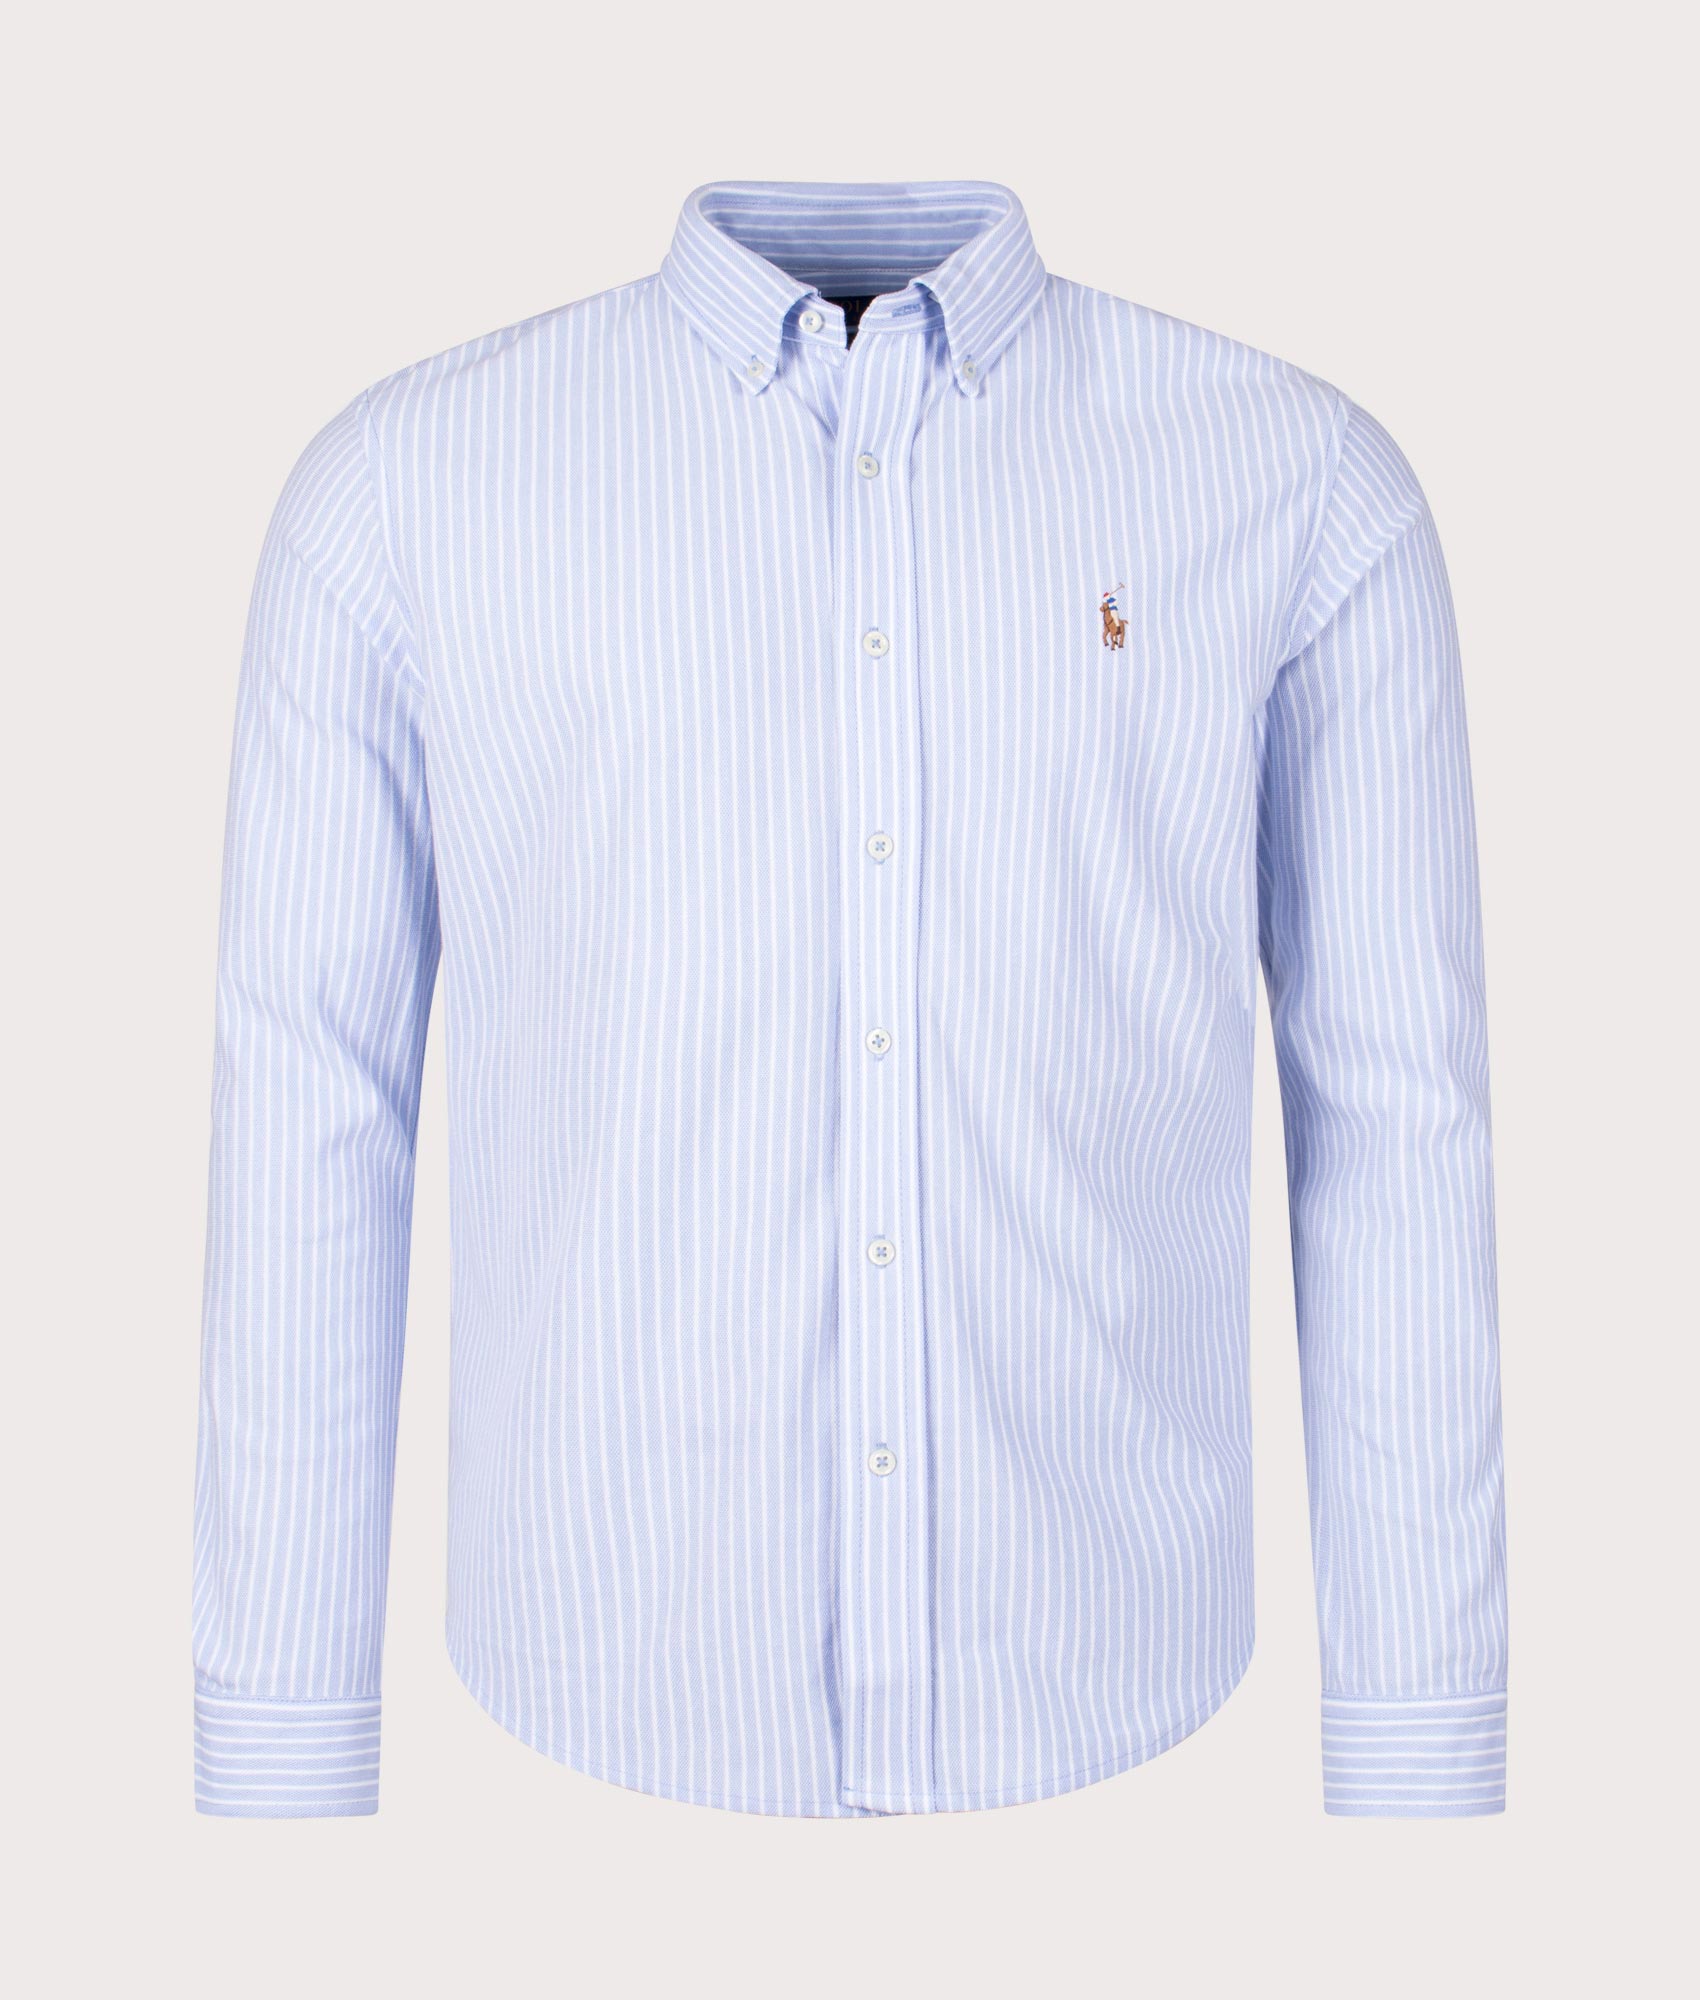 Polo Ralph Lauren Mens Mesh Sport Striped Shirt - Colour: 002 Dress Shirt Blue/White - Size: XL